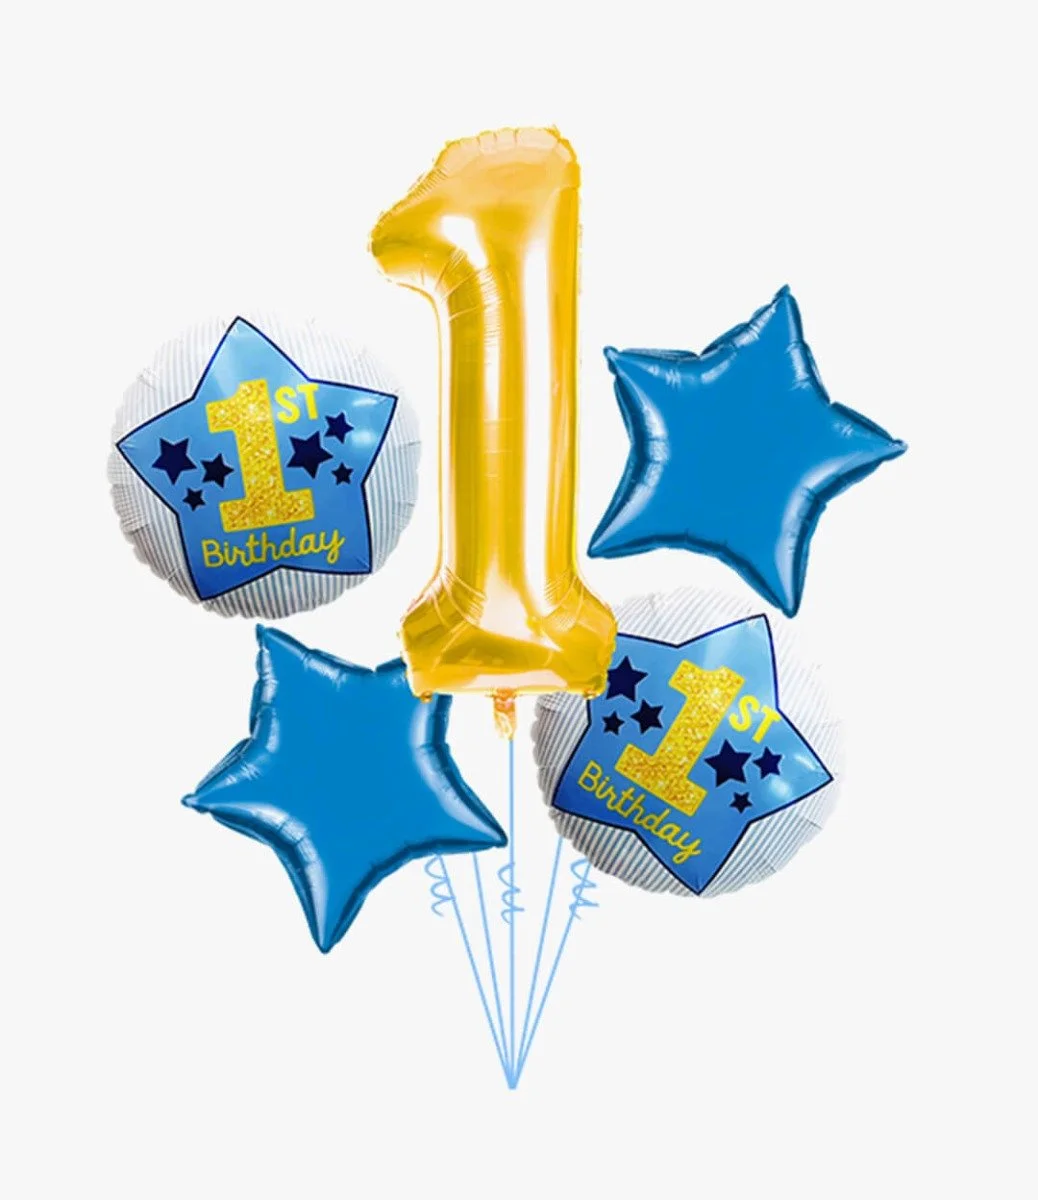 Happy Birthday Balloon 1st Year